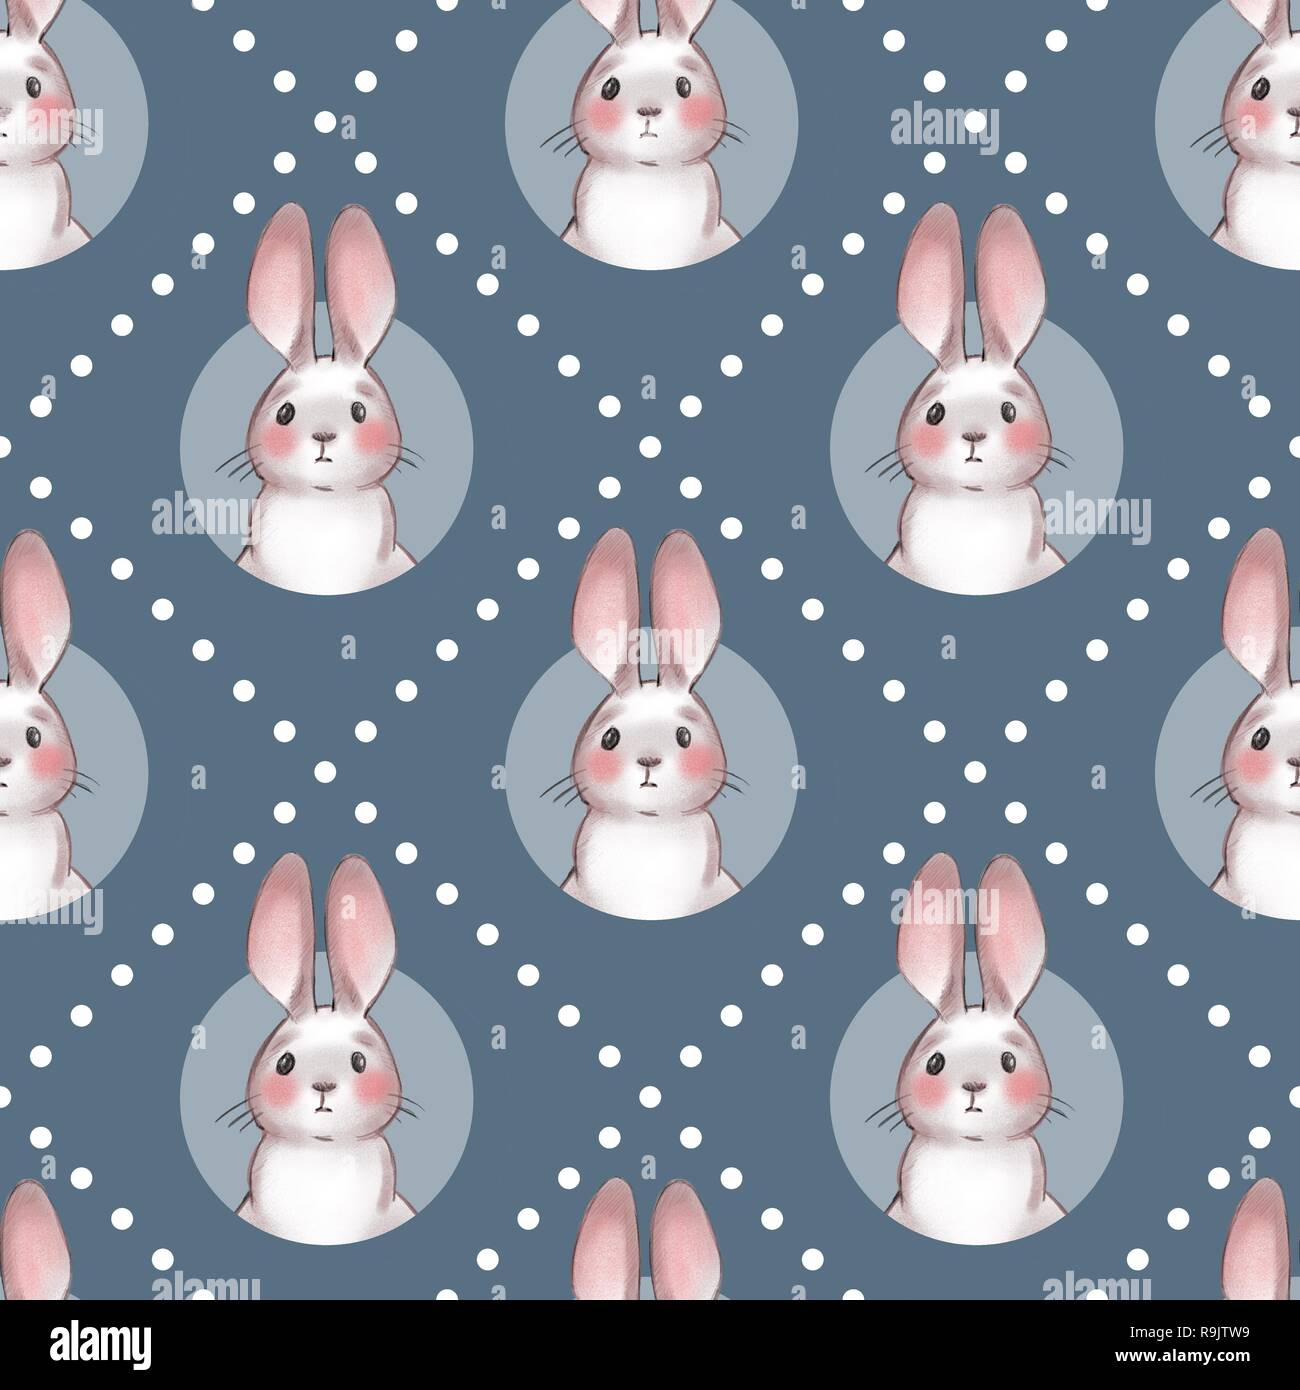 Cute cartoon rabbits. Seamless pattern Stock Photo